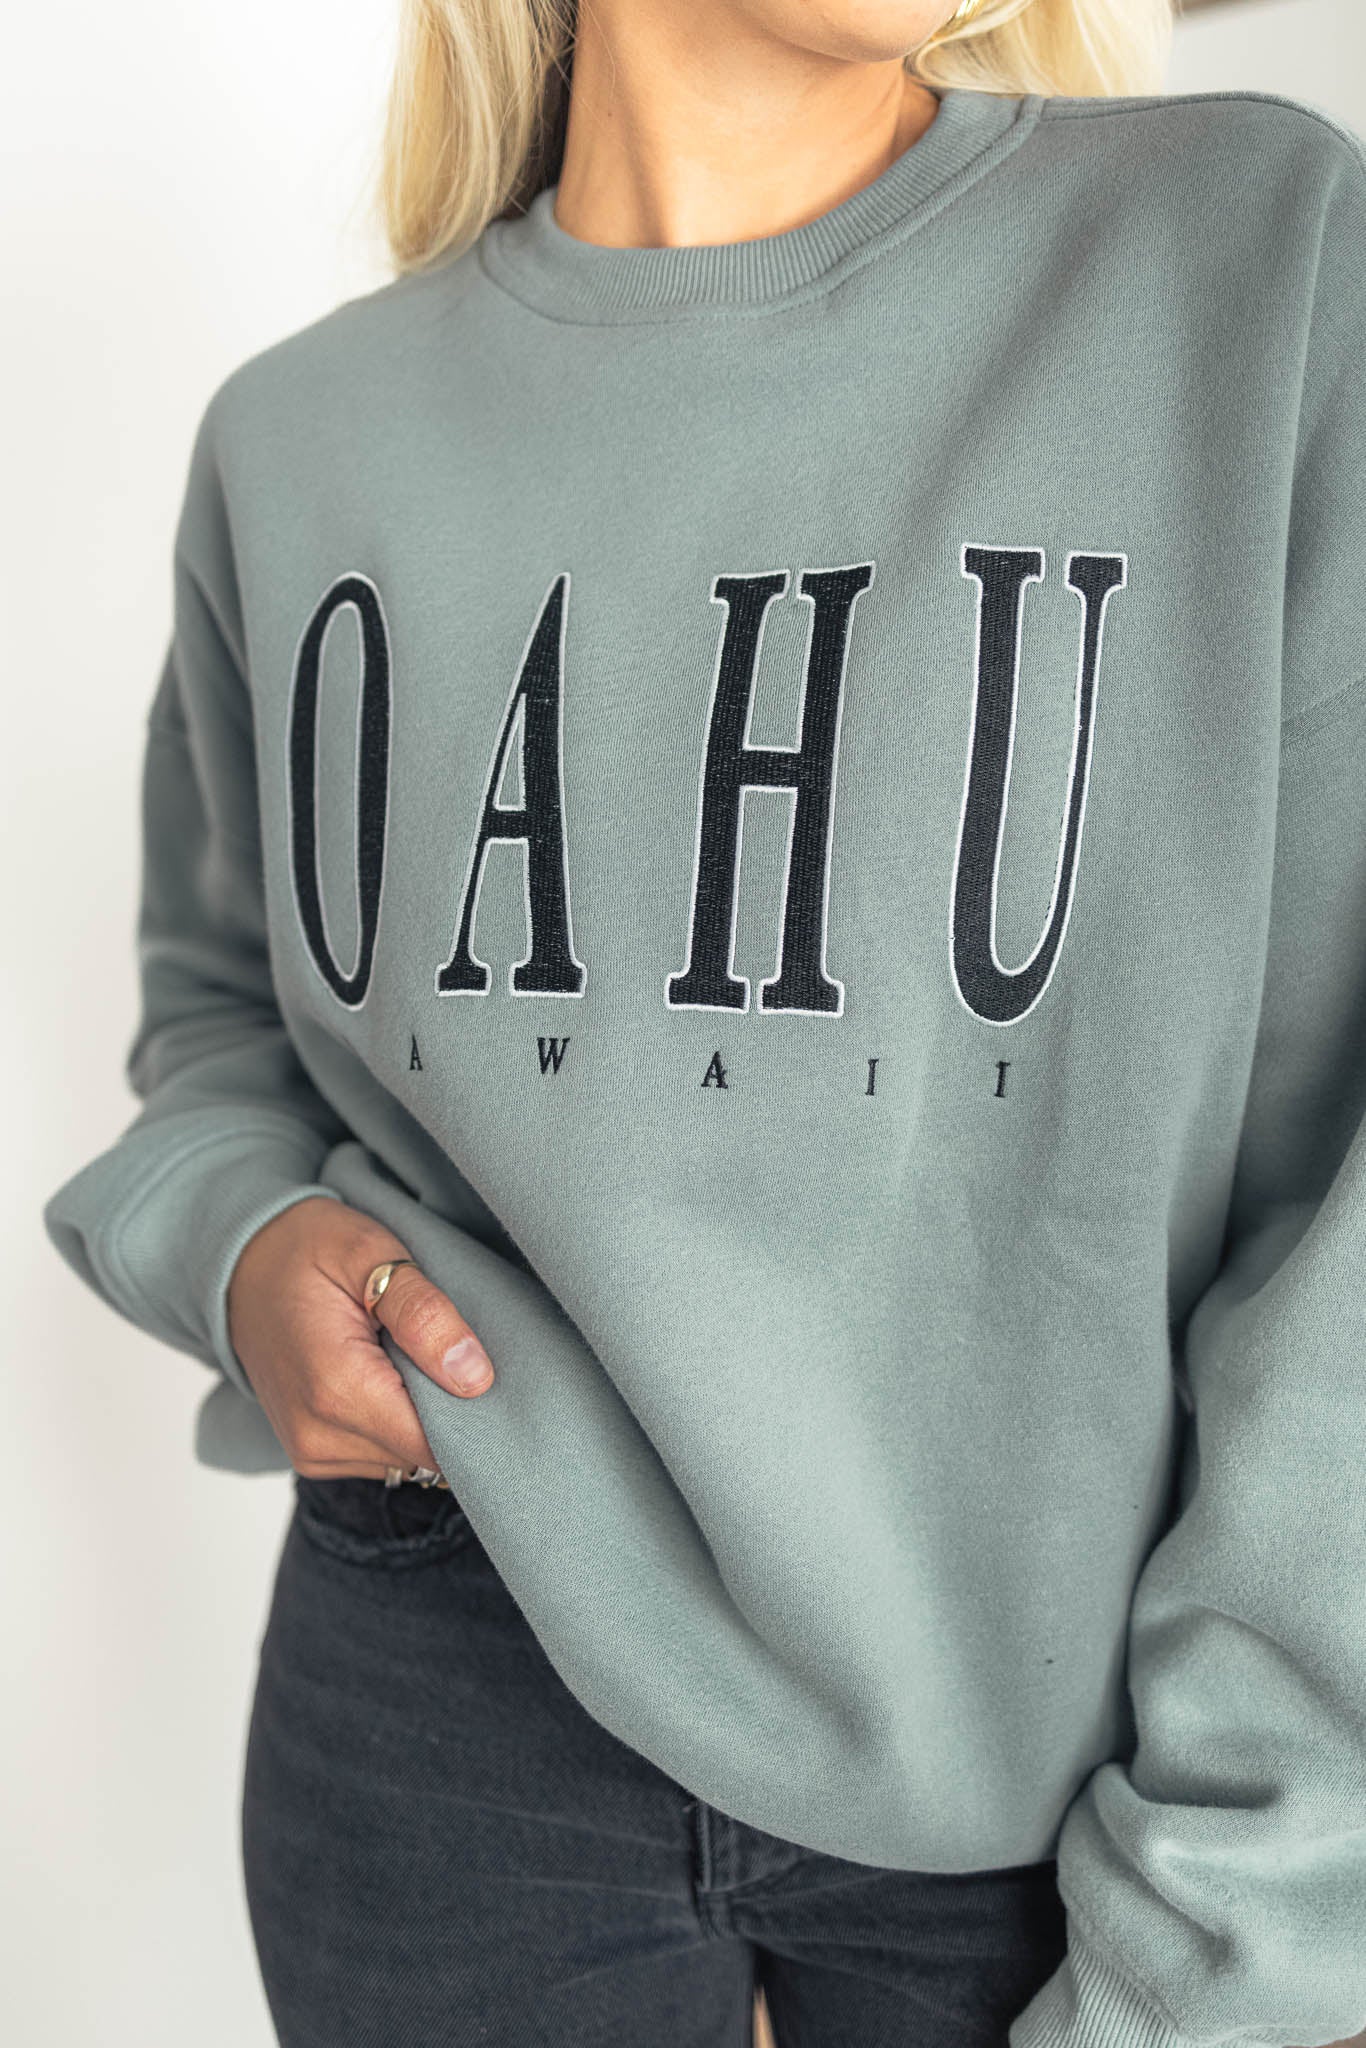 OAHU Vintage Sweatshirt